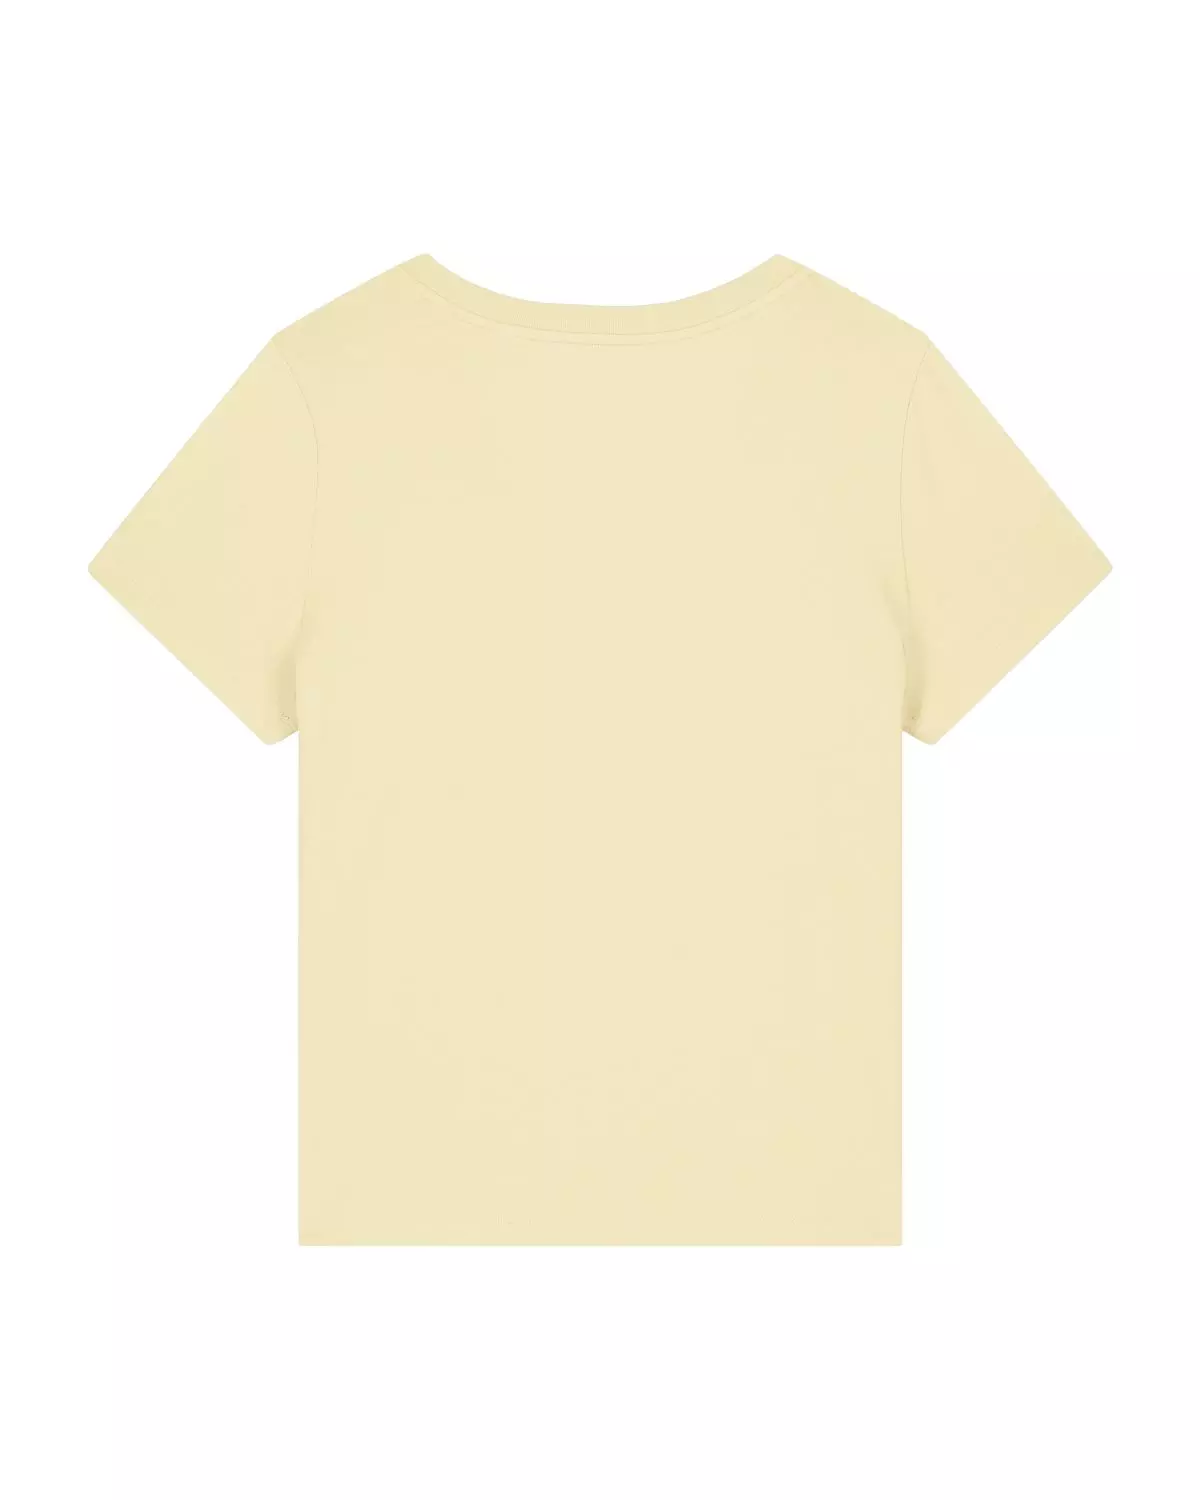 V-Neck T-Shirt Modell: Island